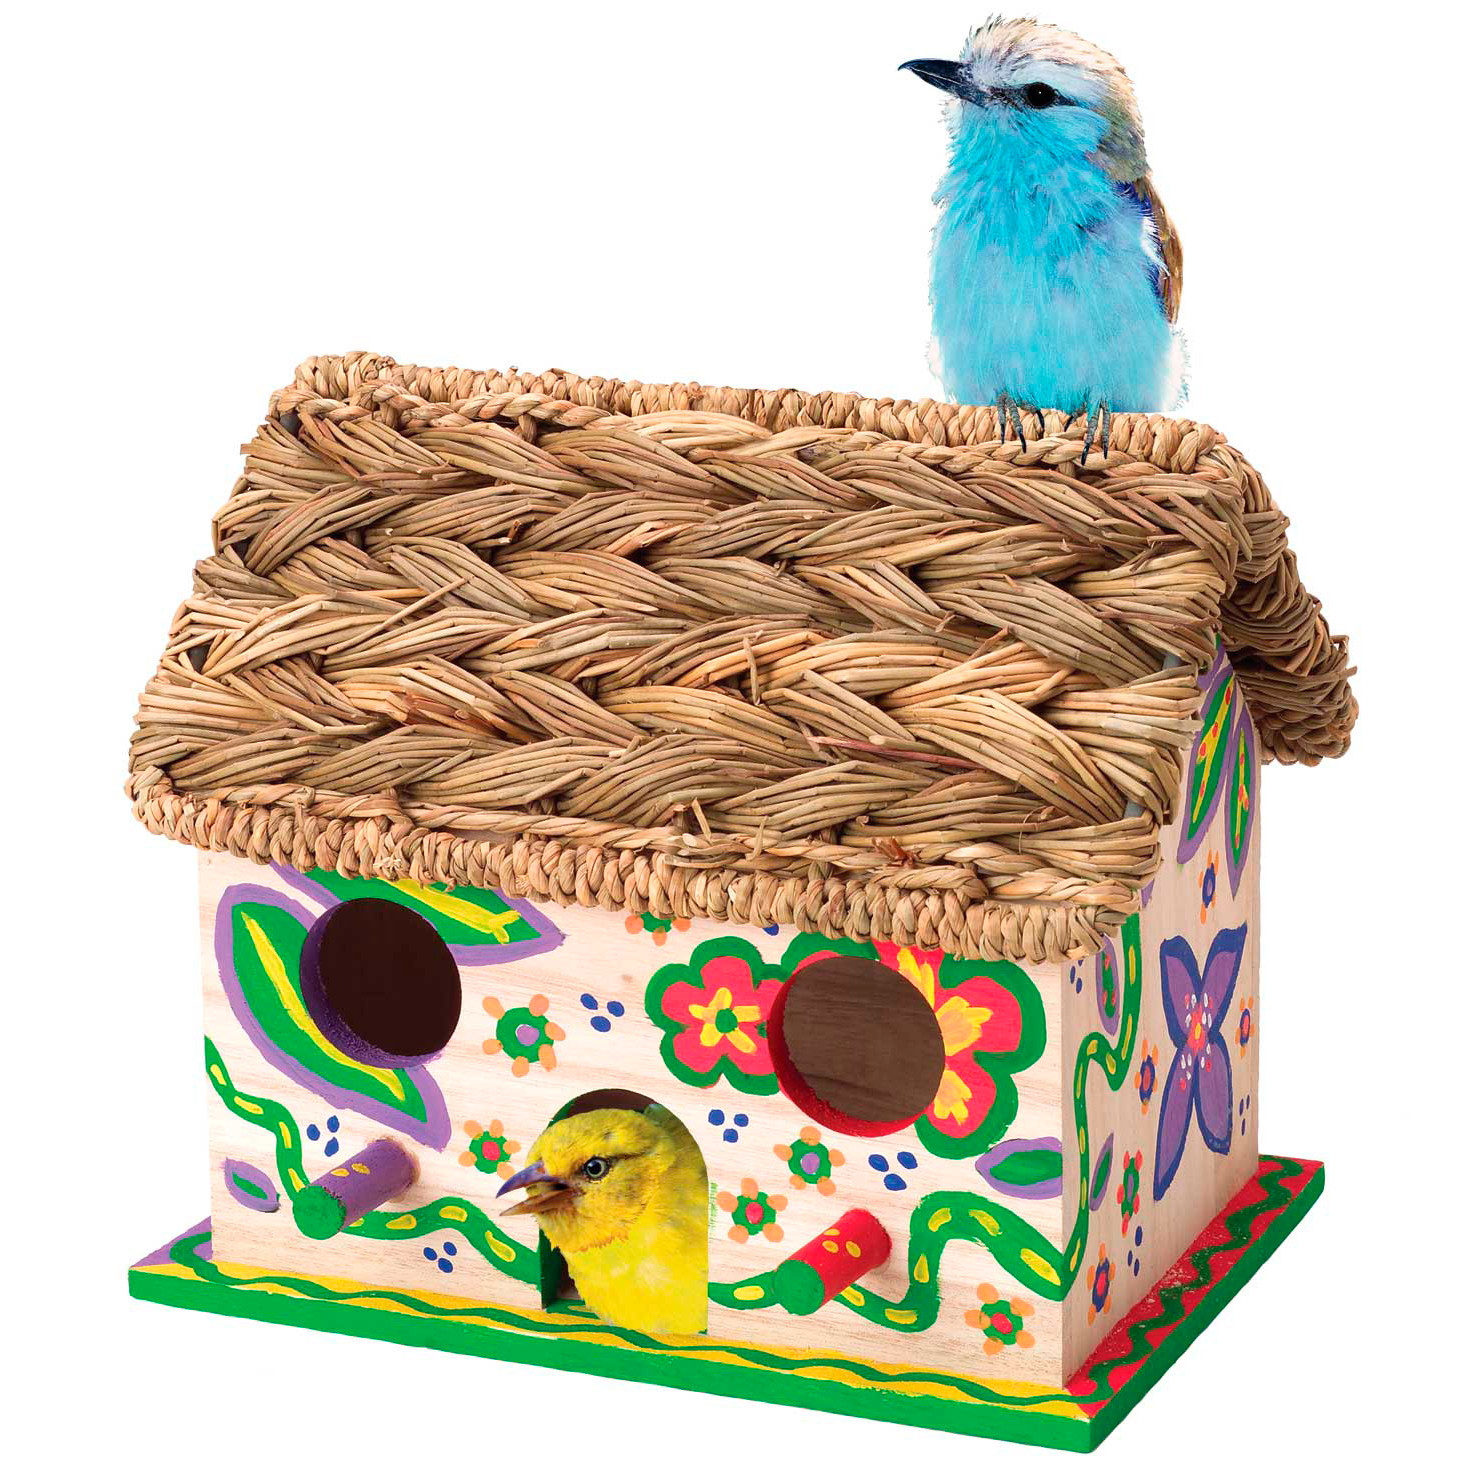 ALEX Toys Craft Home Tweet Home Birdhouse Kit - image 4 of 4